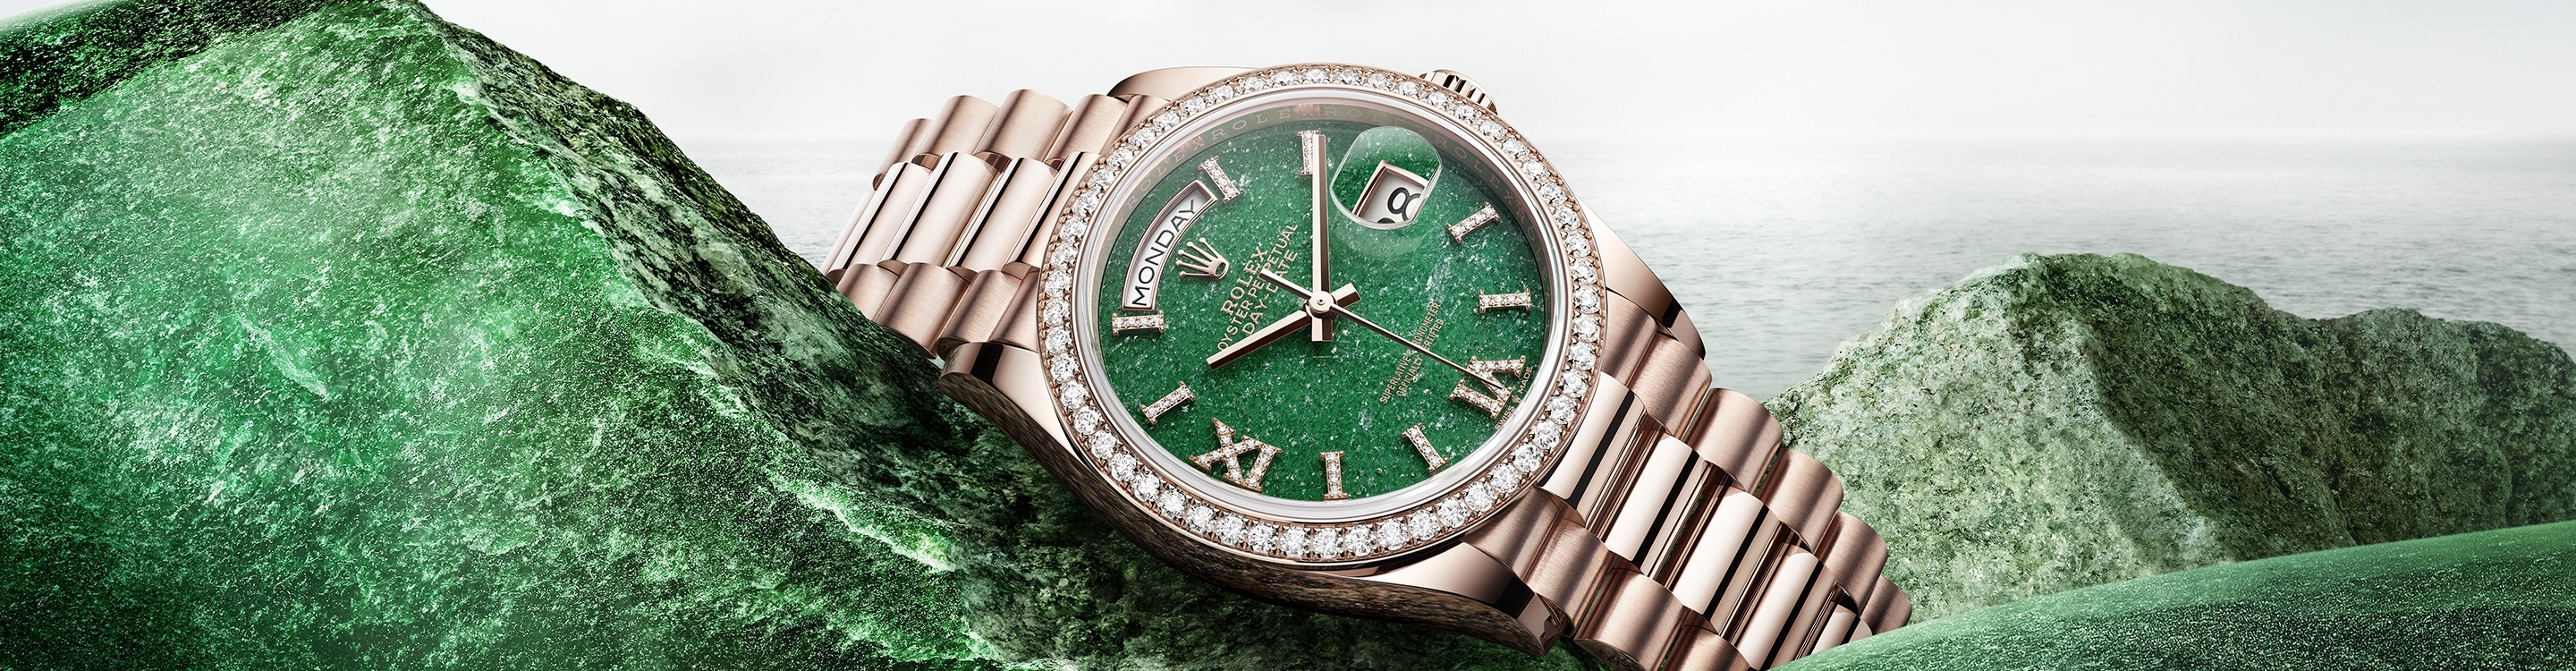 Rolex Day-Date in Platinum, M228236-0012 | Europe Watch Company